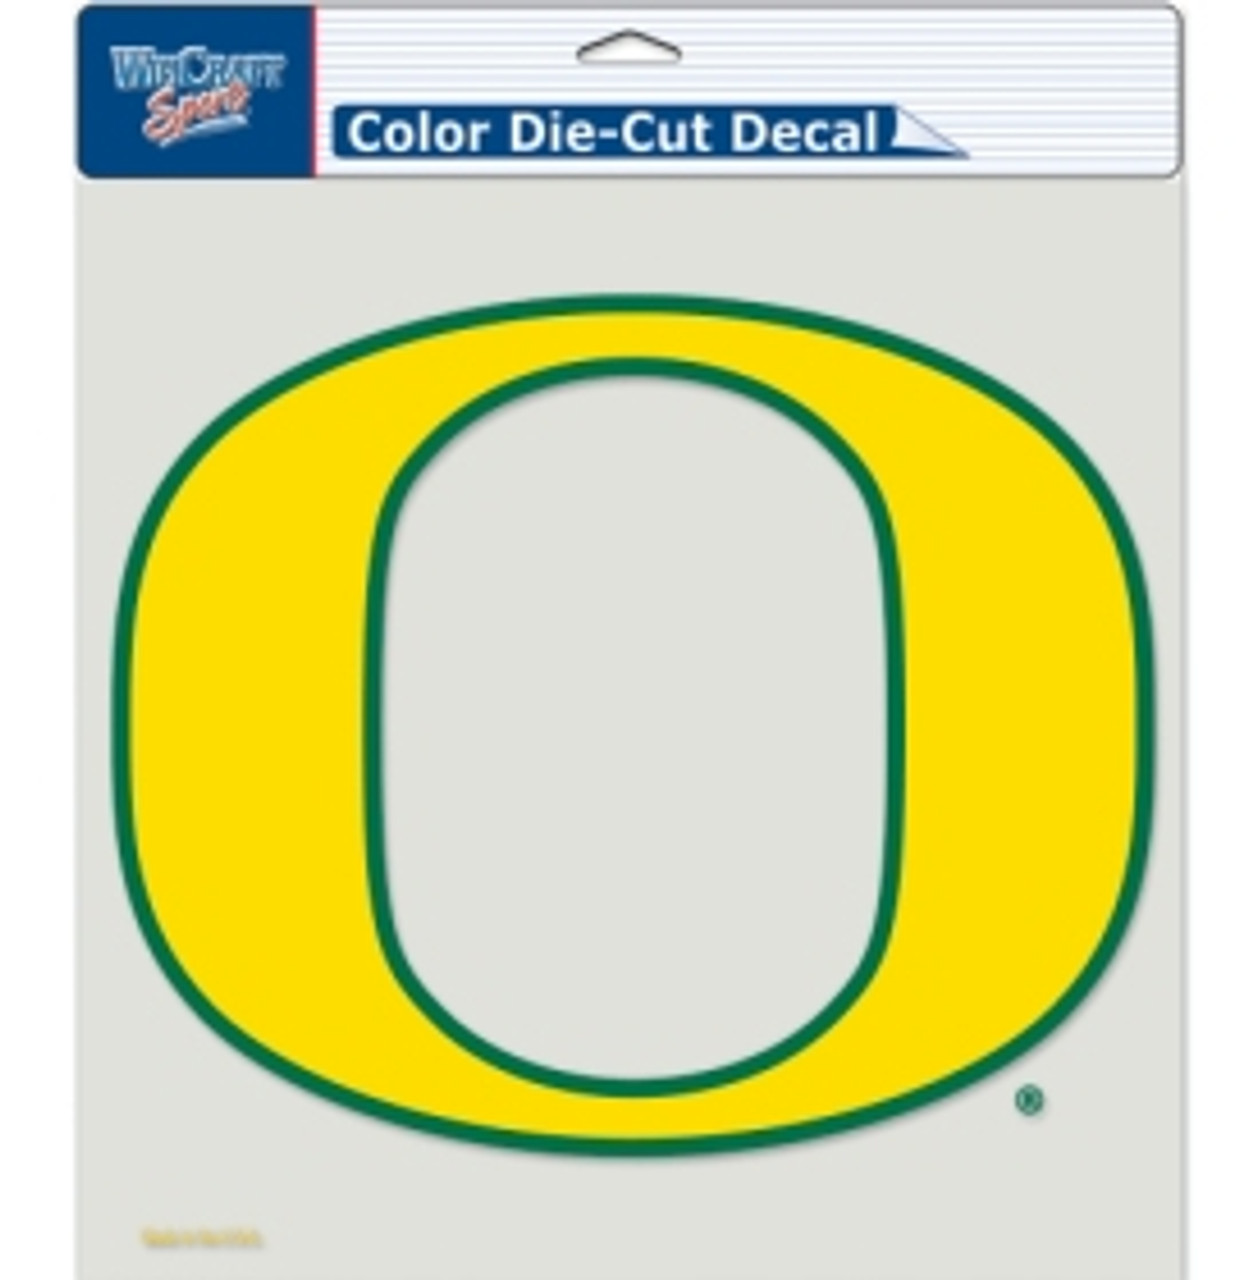 Oregon Ducks Decal 8x8 Die Cut Color